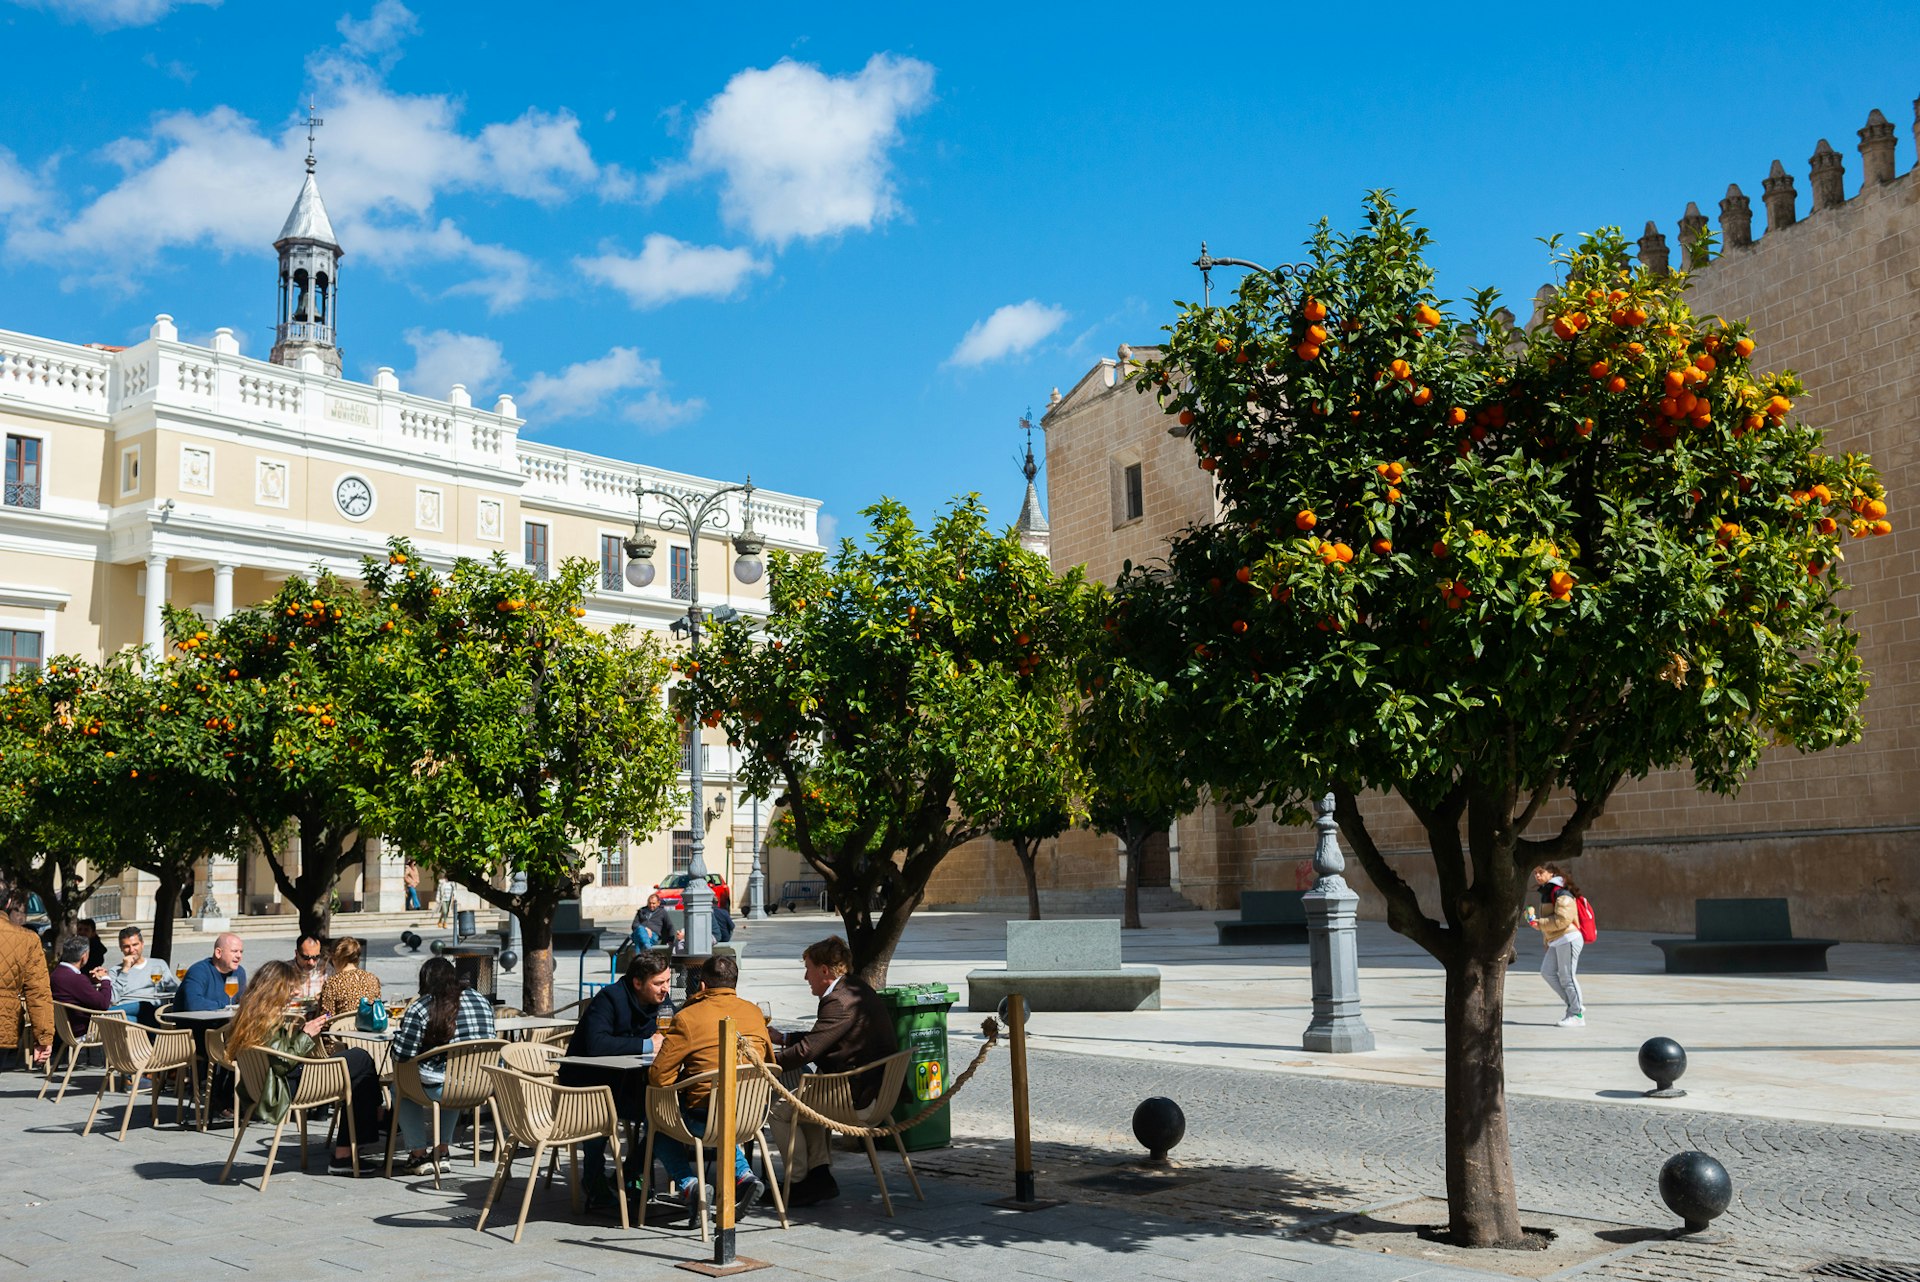 People dining outdoors at Plaza de España, Badajoz, Spain